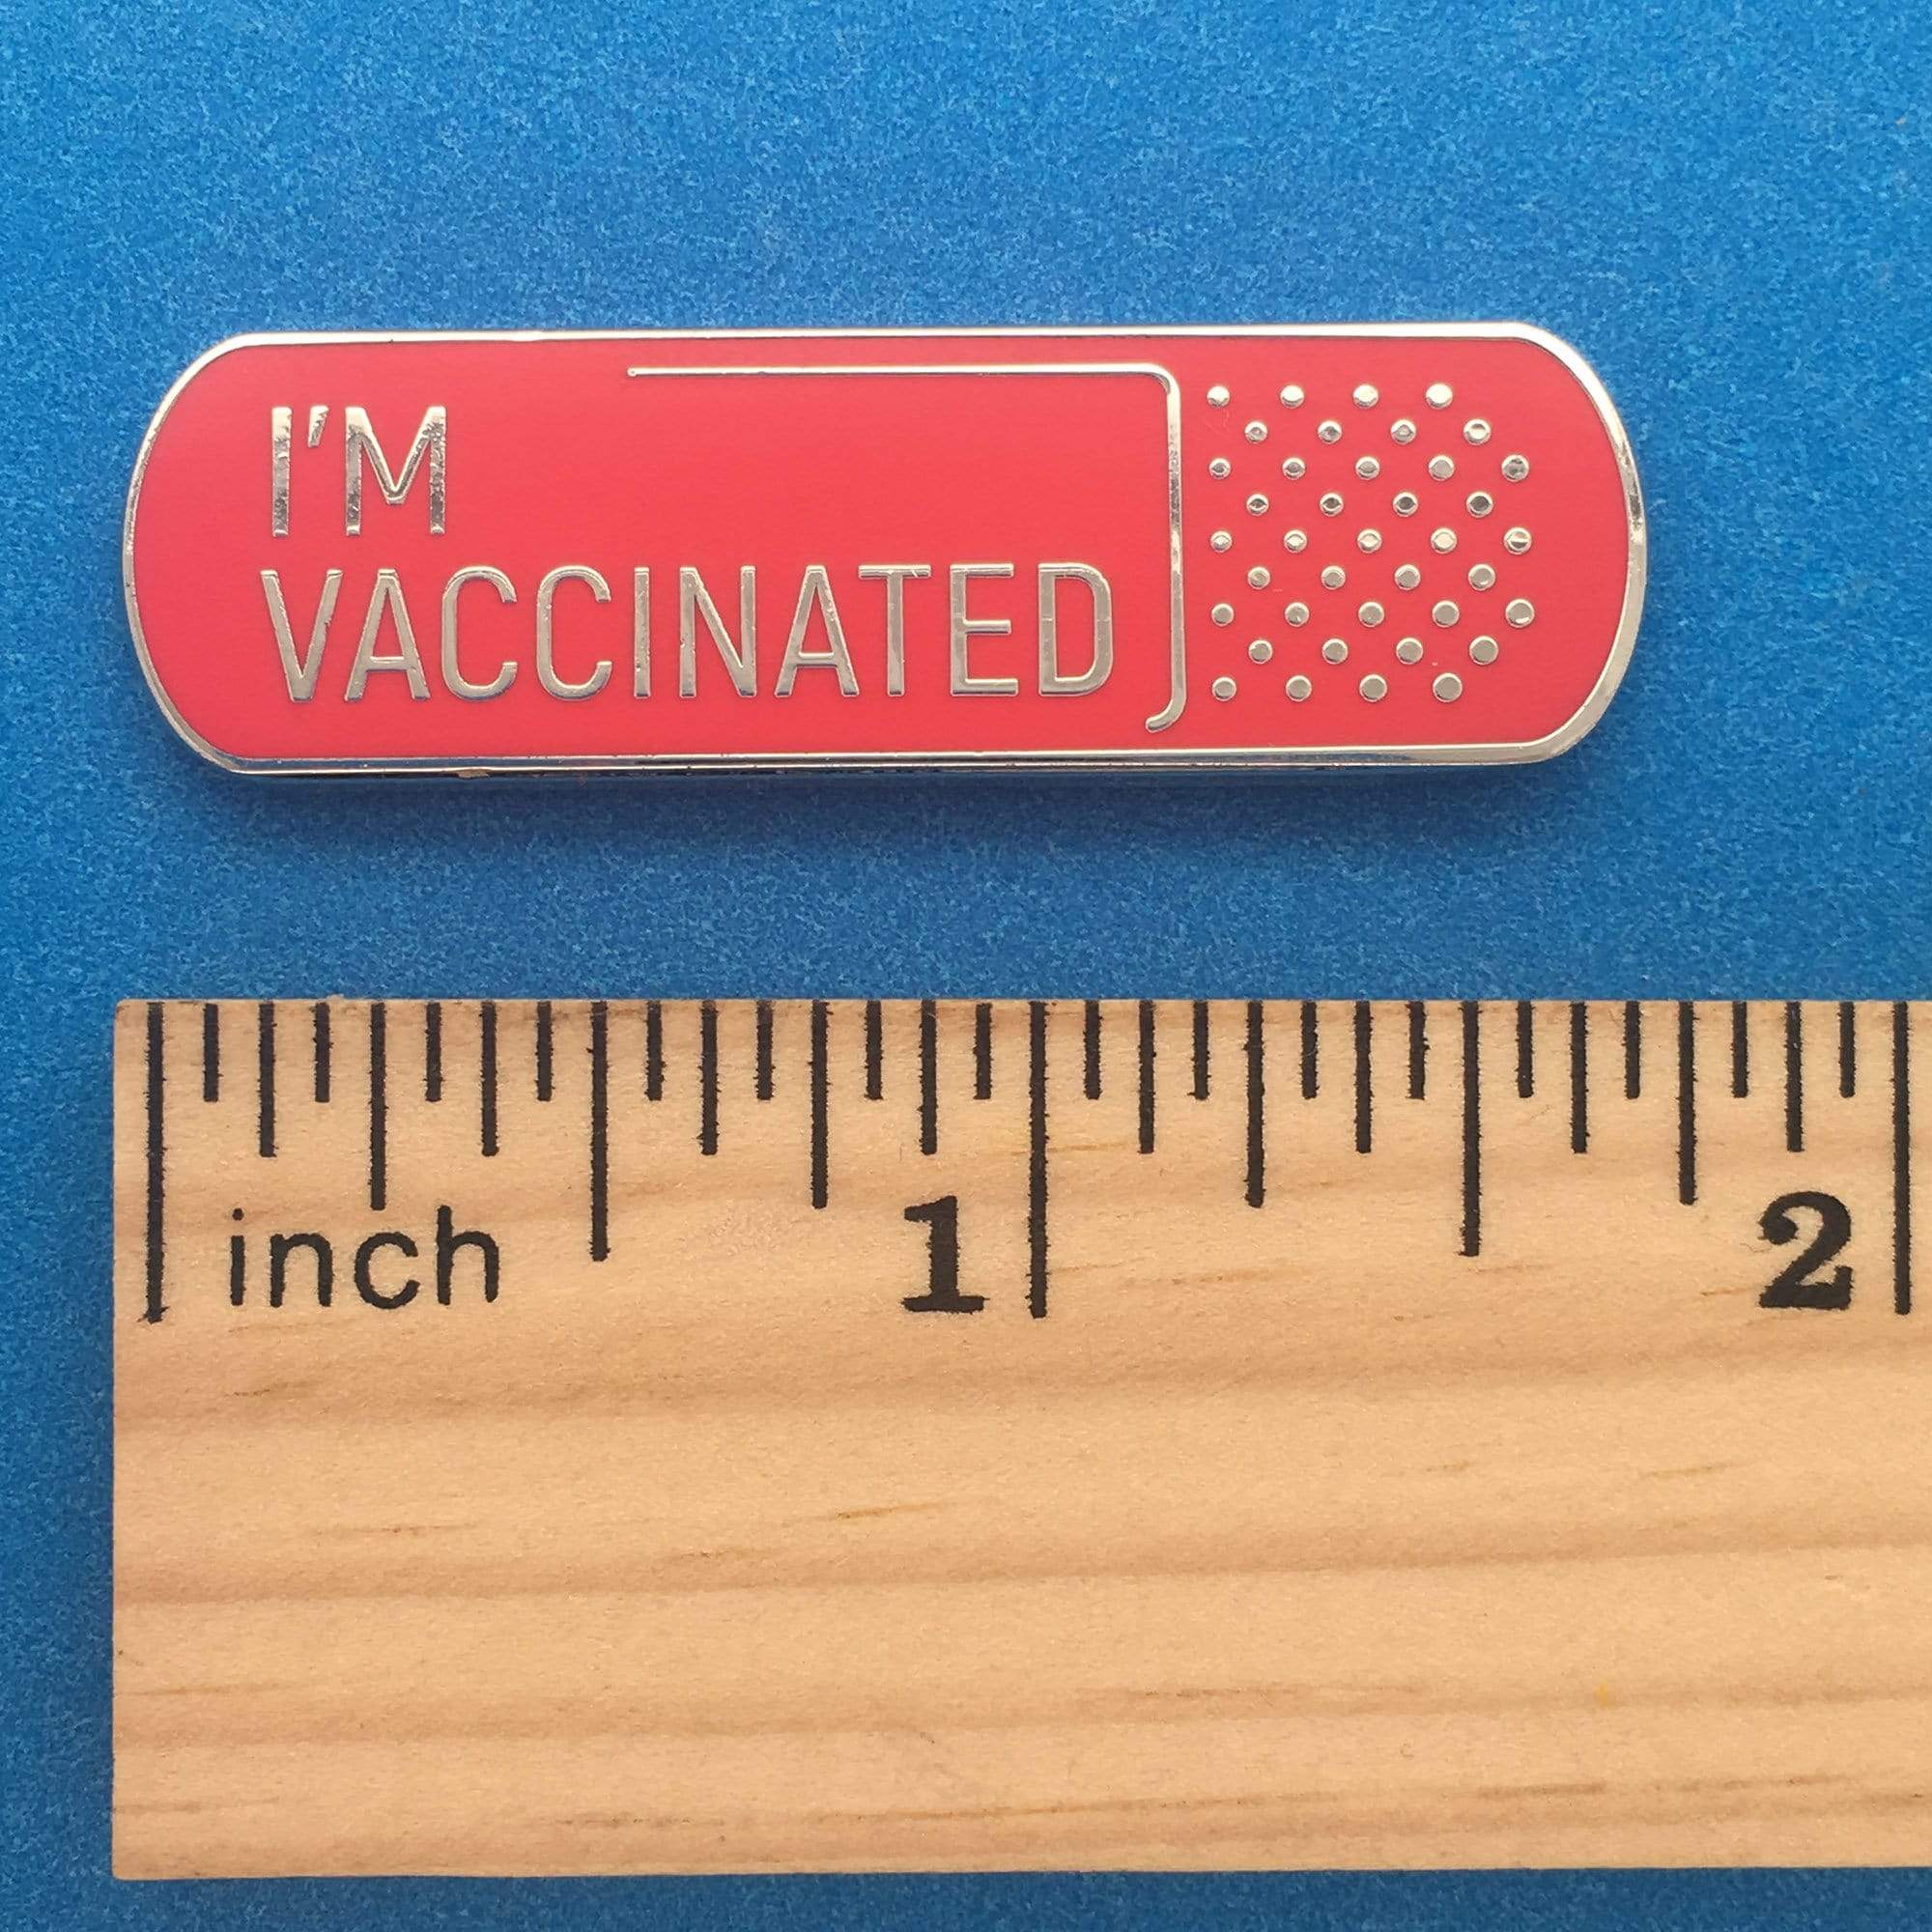 I'm Vaccinated pin